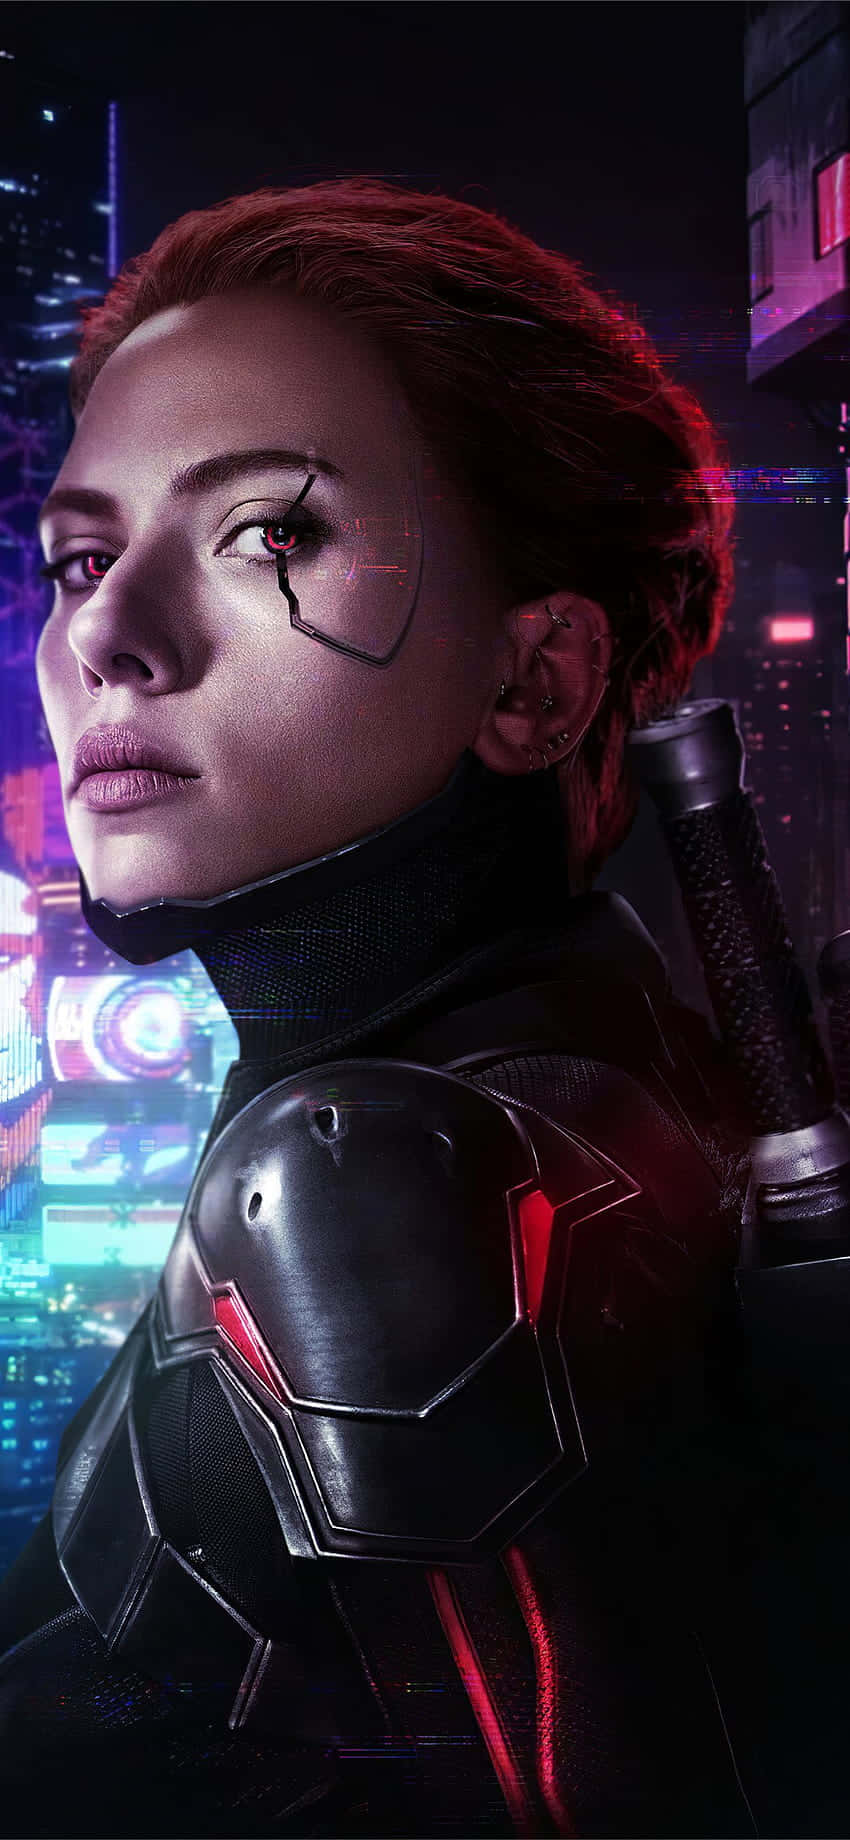 Iphonex Cyberpunk 2077 Bakgrund Scarlett Johansson Redigerat.